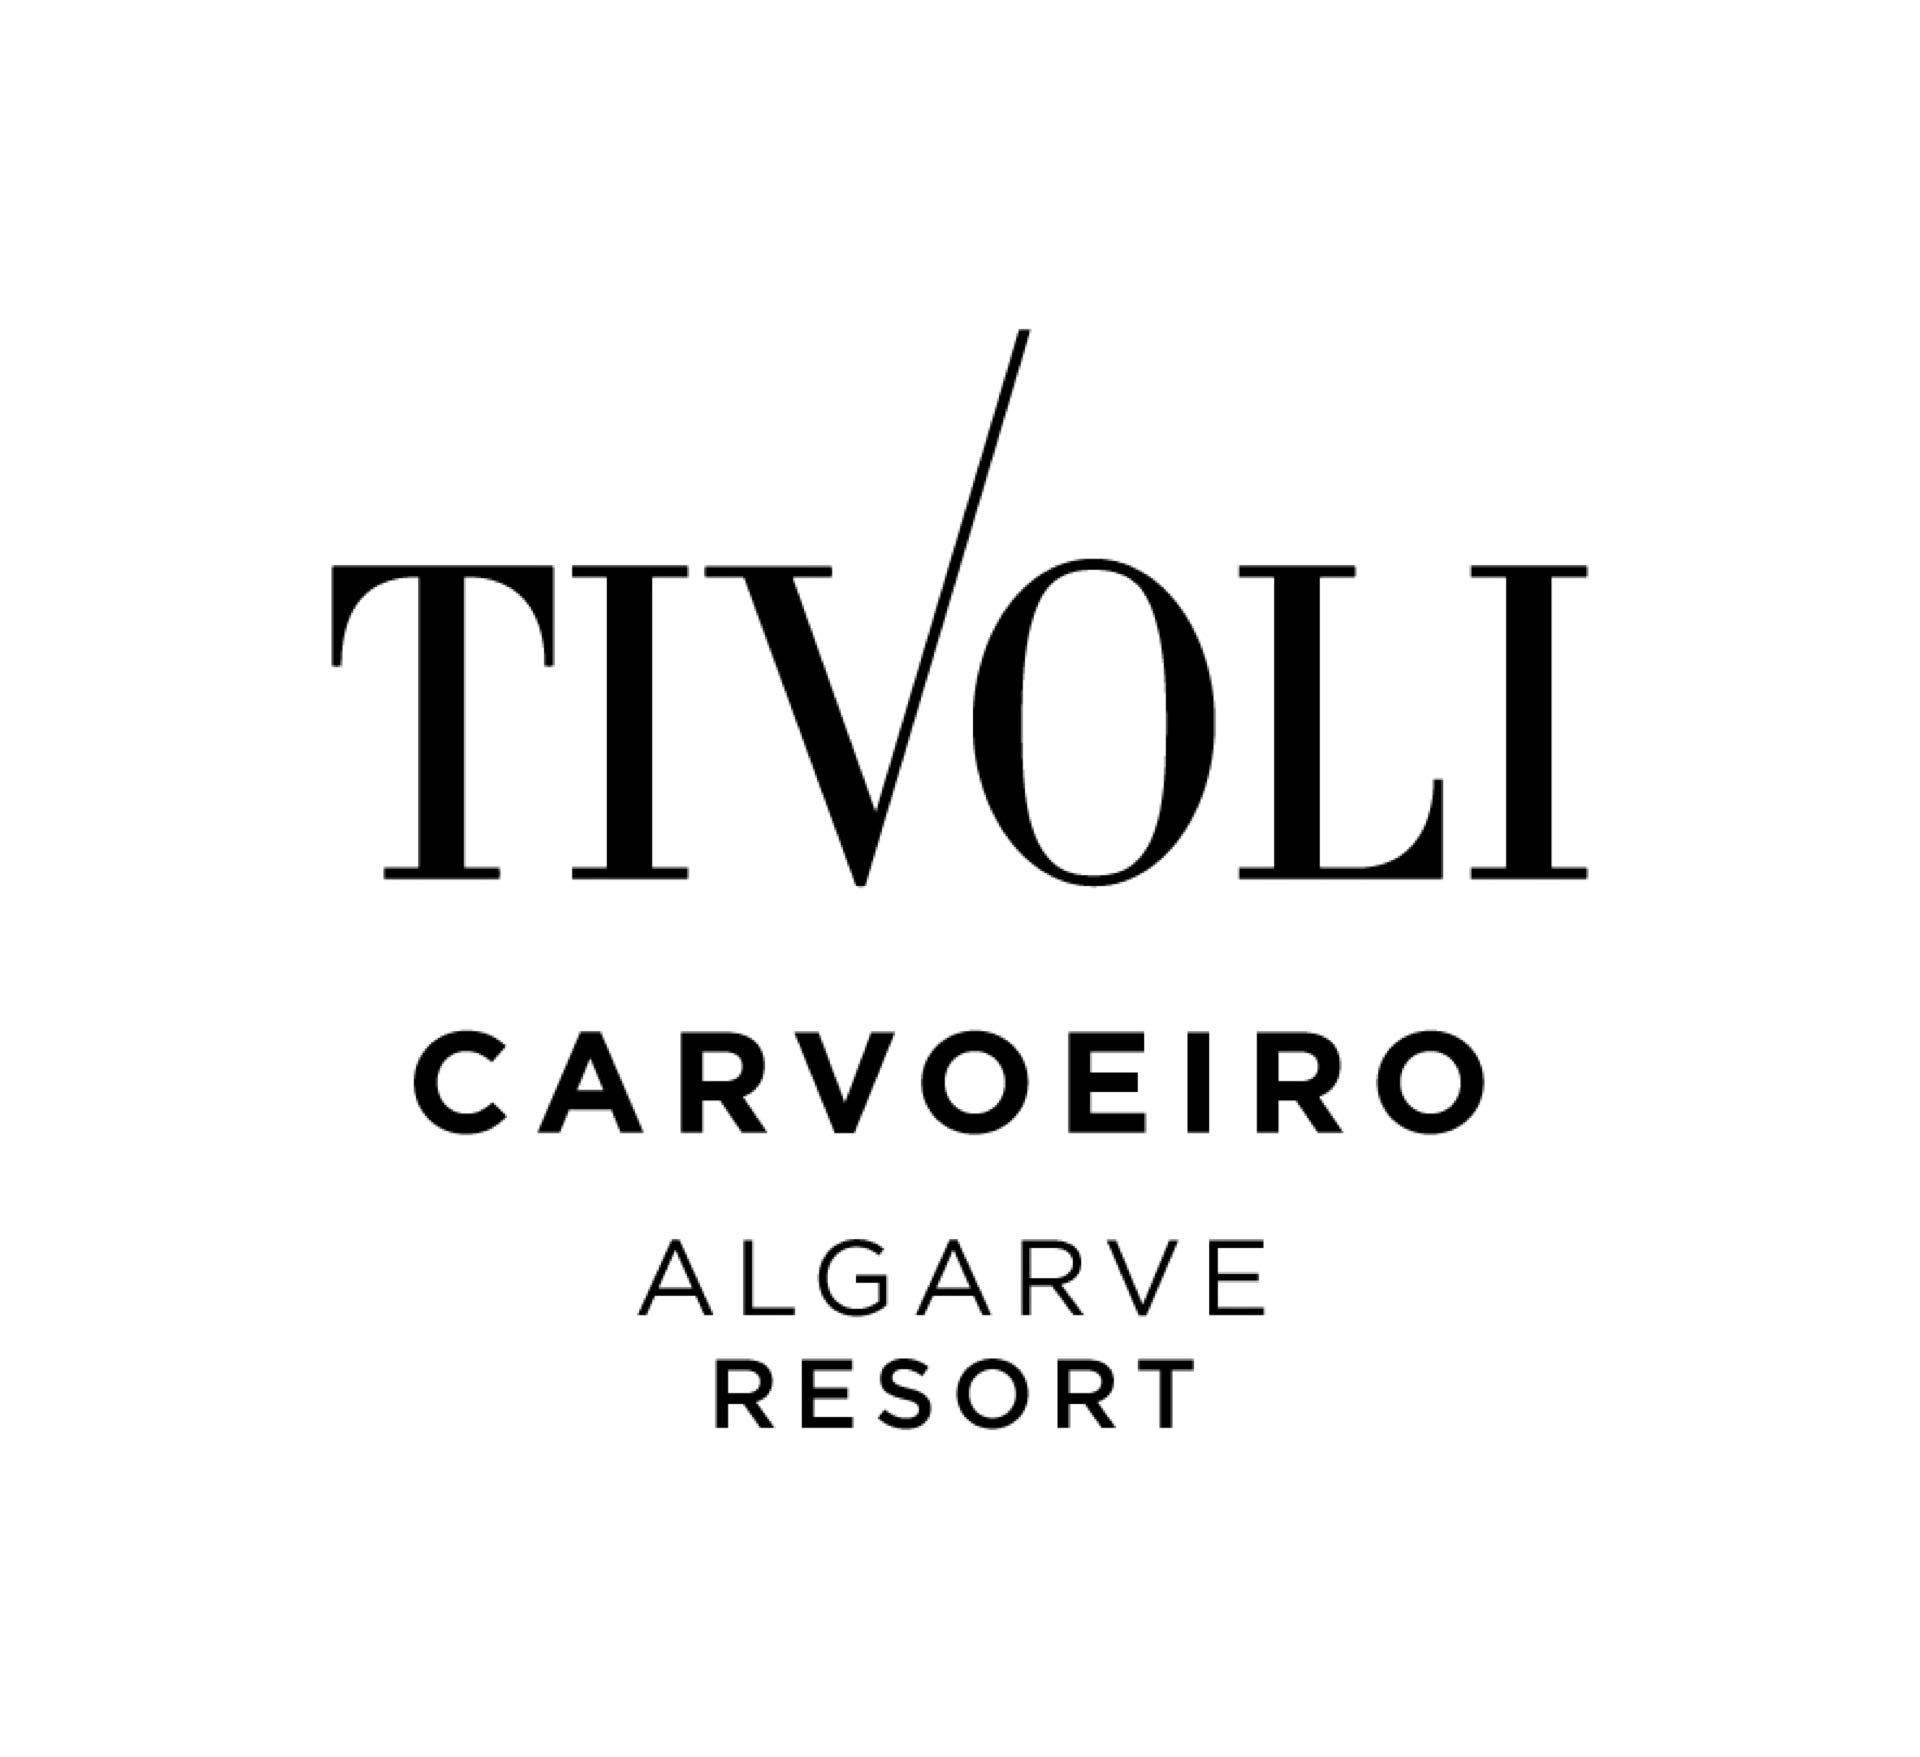 Tivoli Carvoeiro Algarve Resort - logo